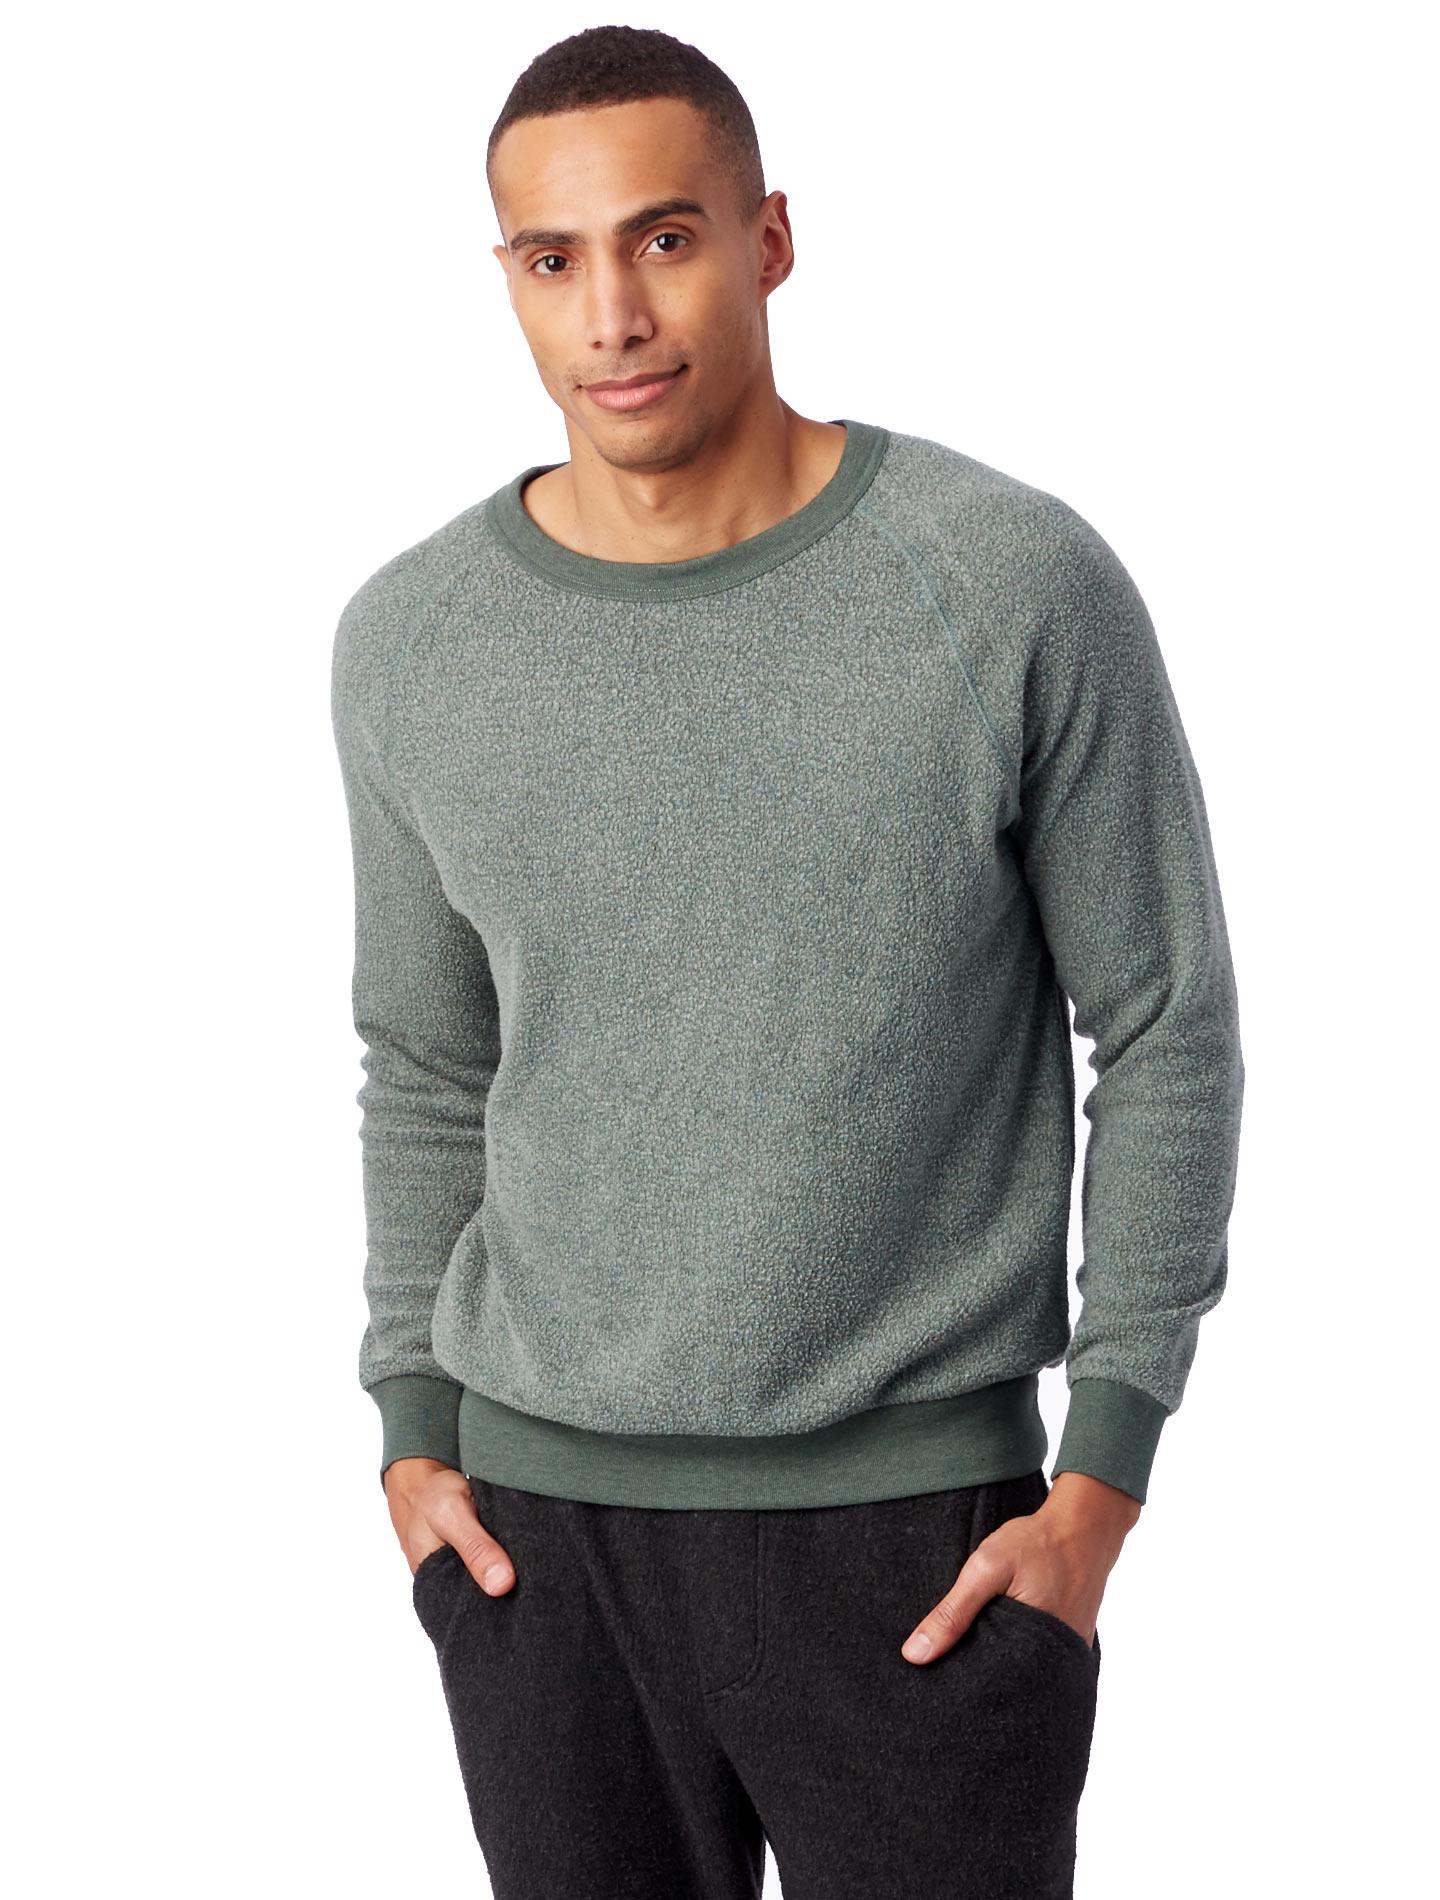 Lyst - Alternative Apparel Champ Eco-teddy Sweatshirt in Gray for Men